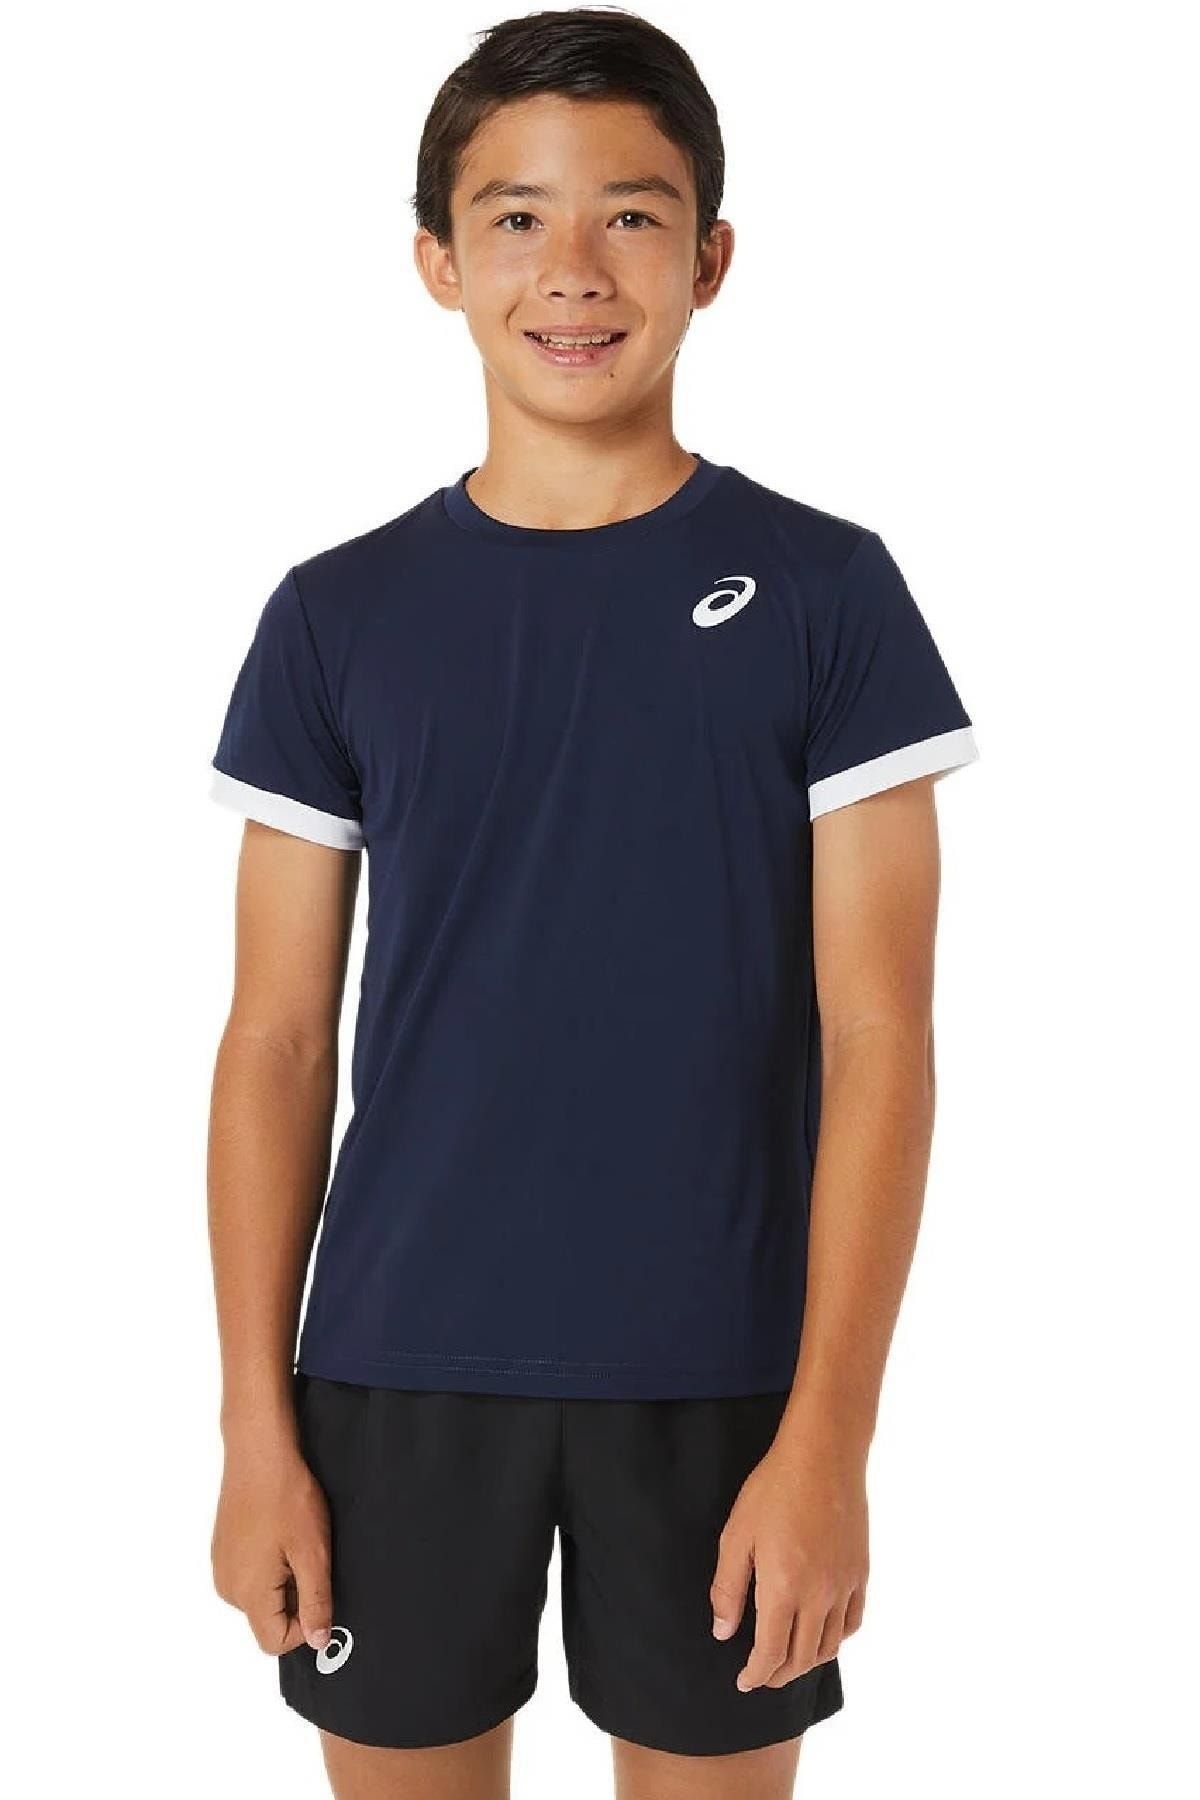 Asics Ss Top Erkek Çocuk Lacivert Tenis Tişört